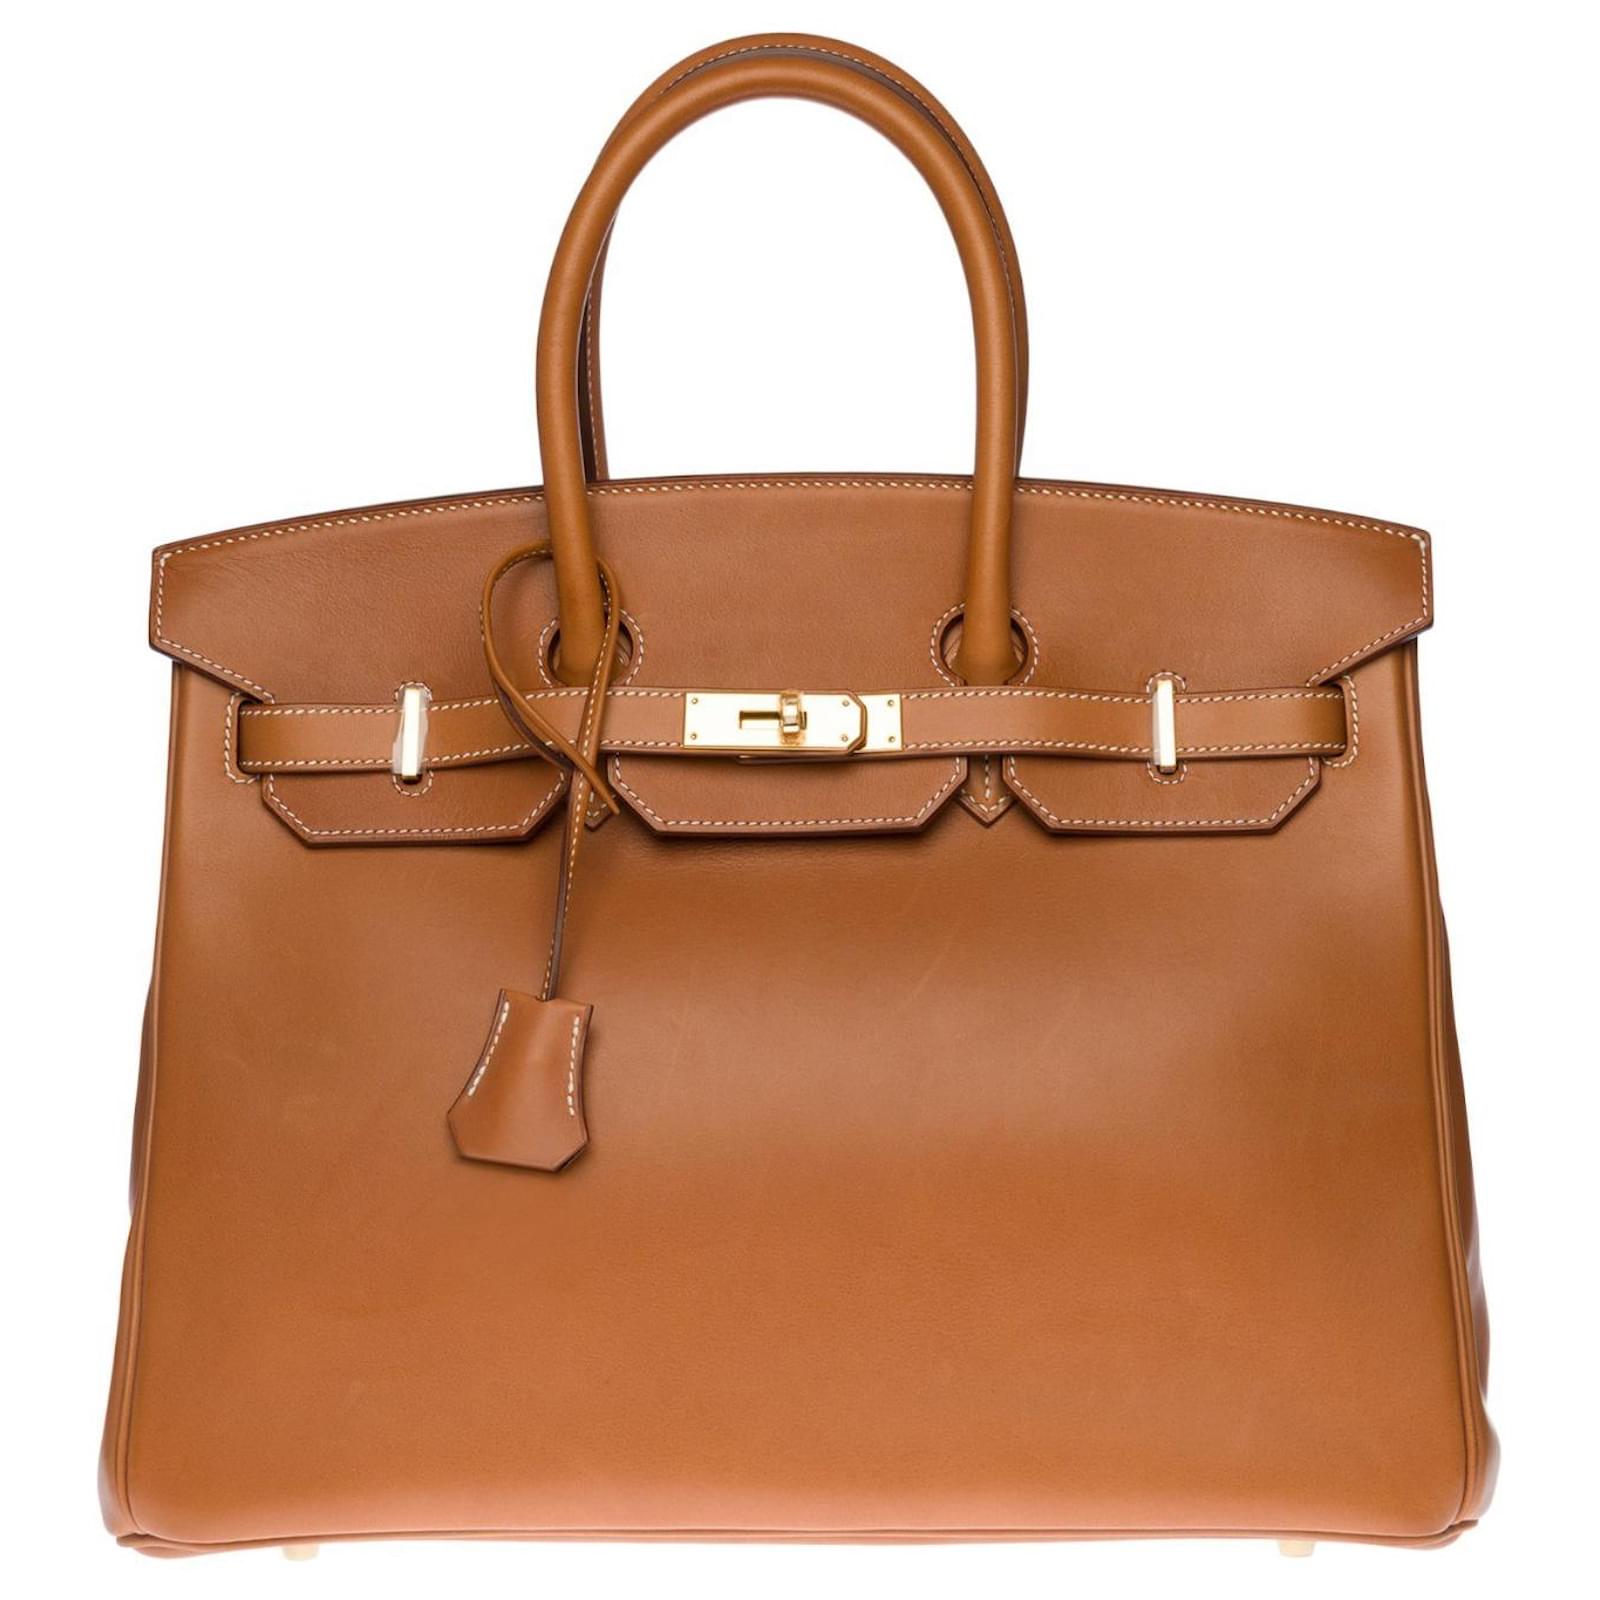 Hermès Extremely rare & exceptional Hermes Birkin handbag 35 cm in